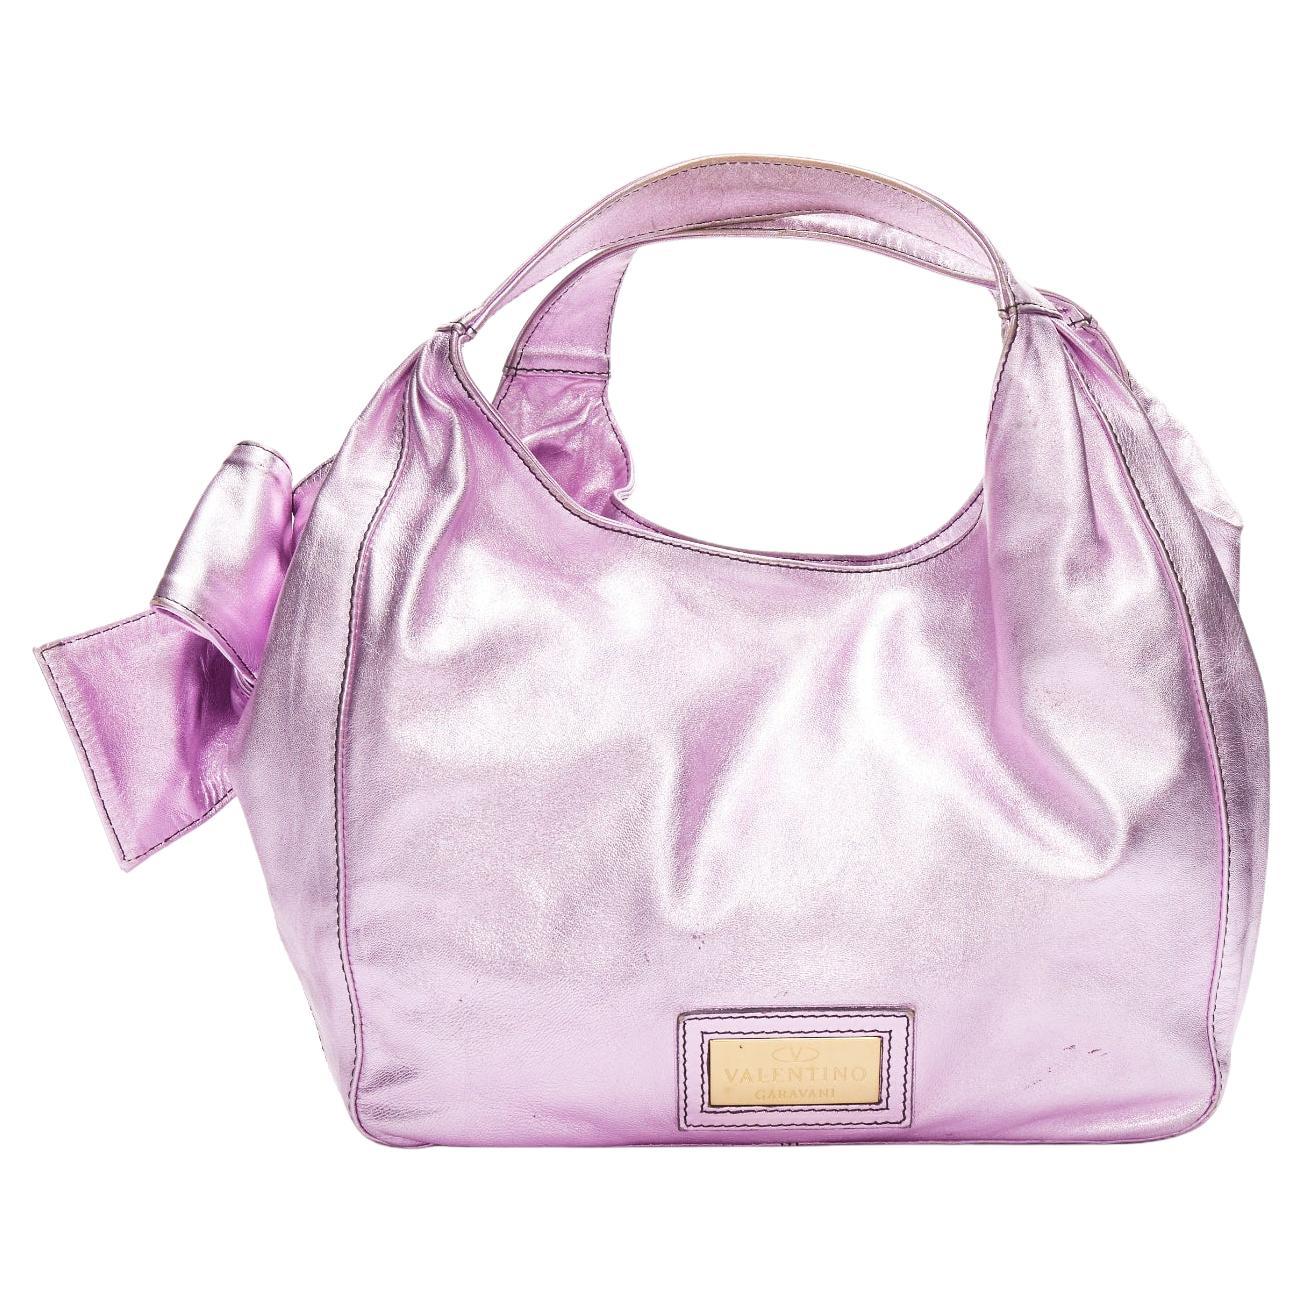 VALENTINO GARAVANI metallic purple leather bow detail hobo tote bag For Sale